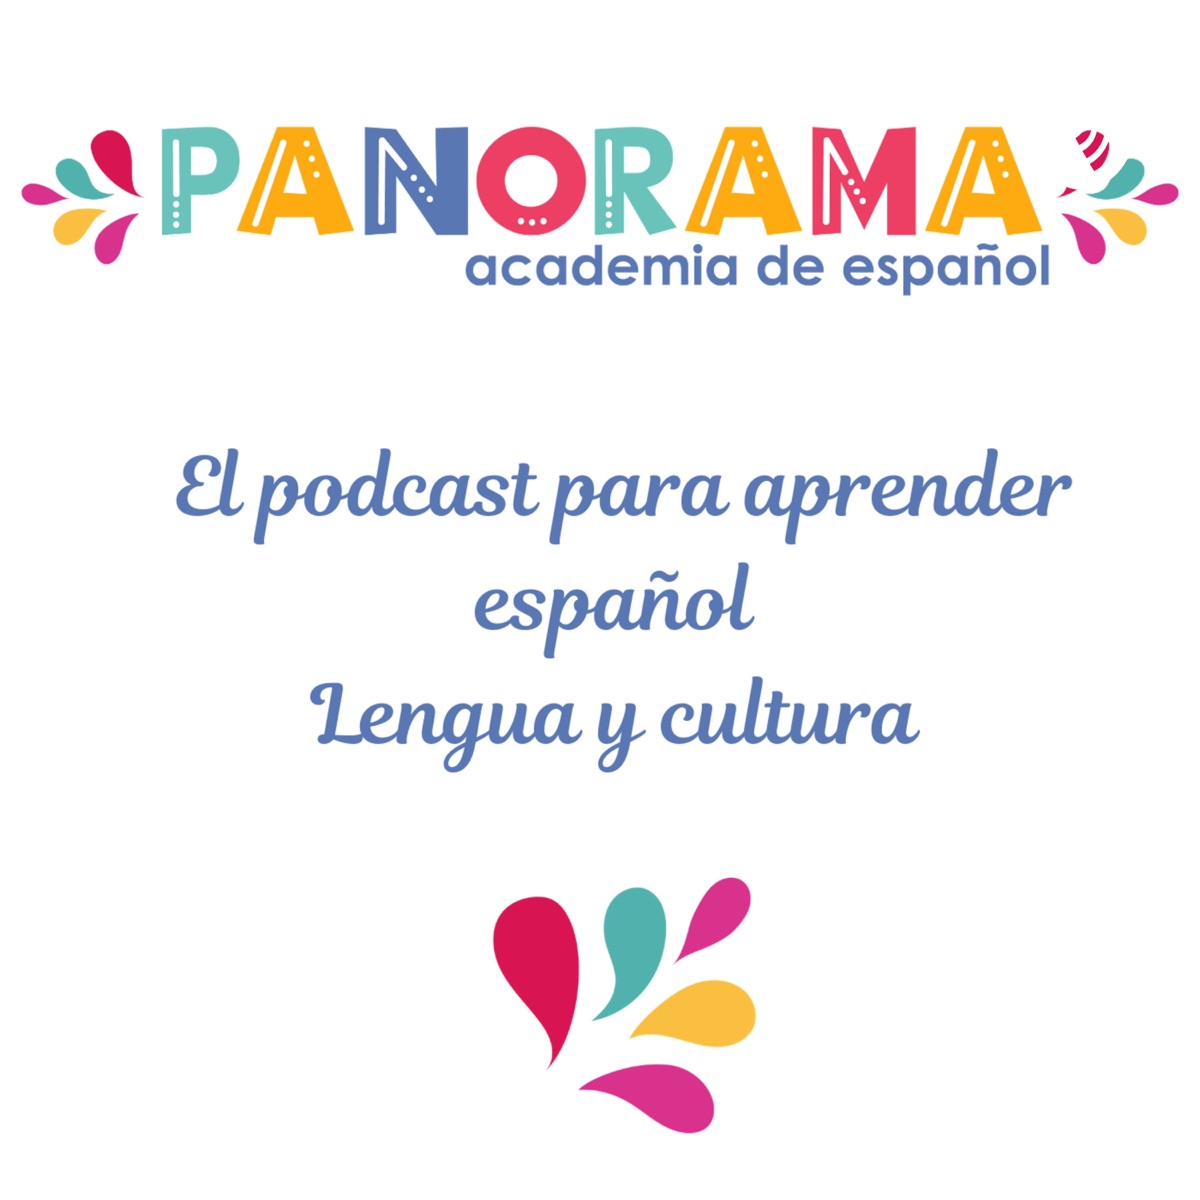 Panorama Ele Podcast Academia De Español Online Podcasts En Español